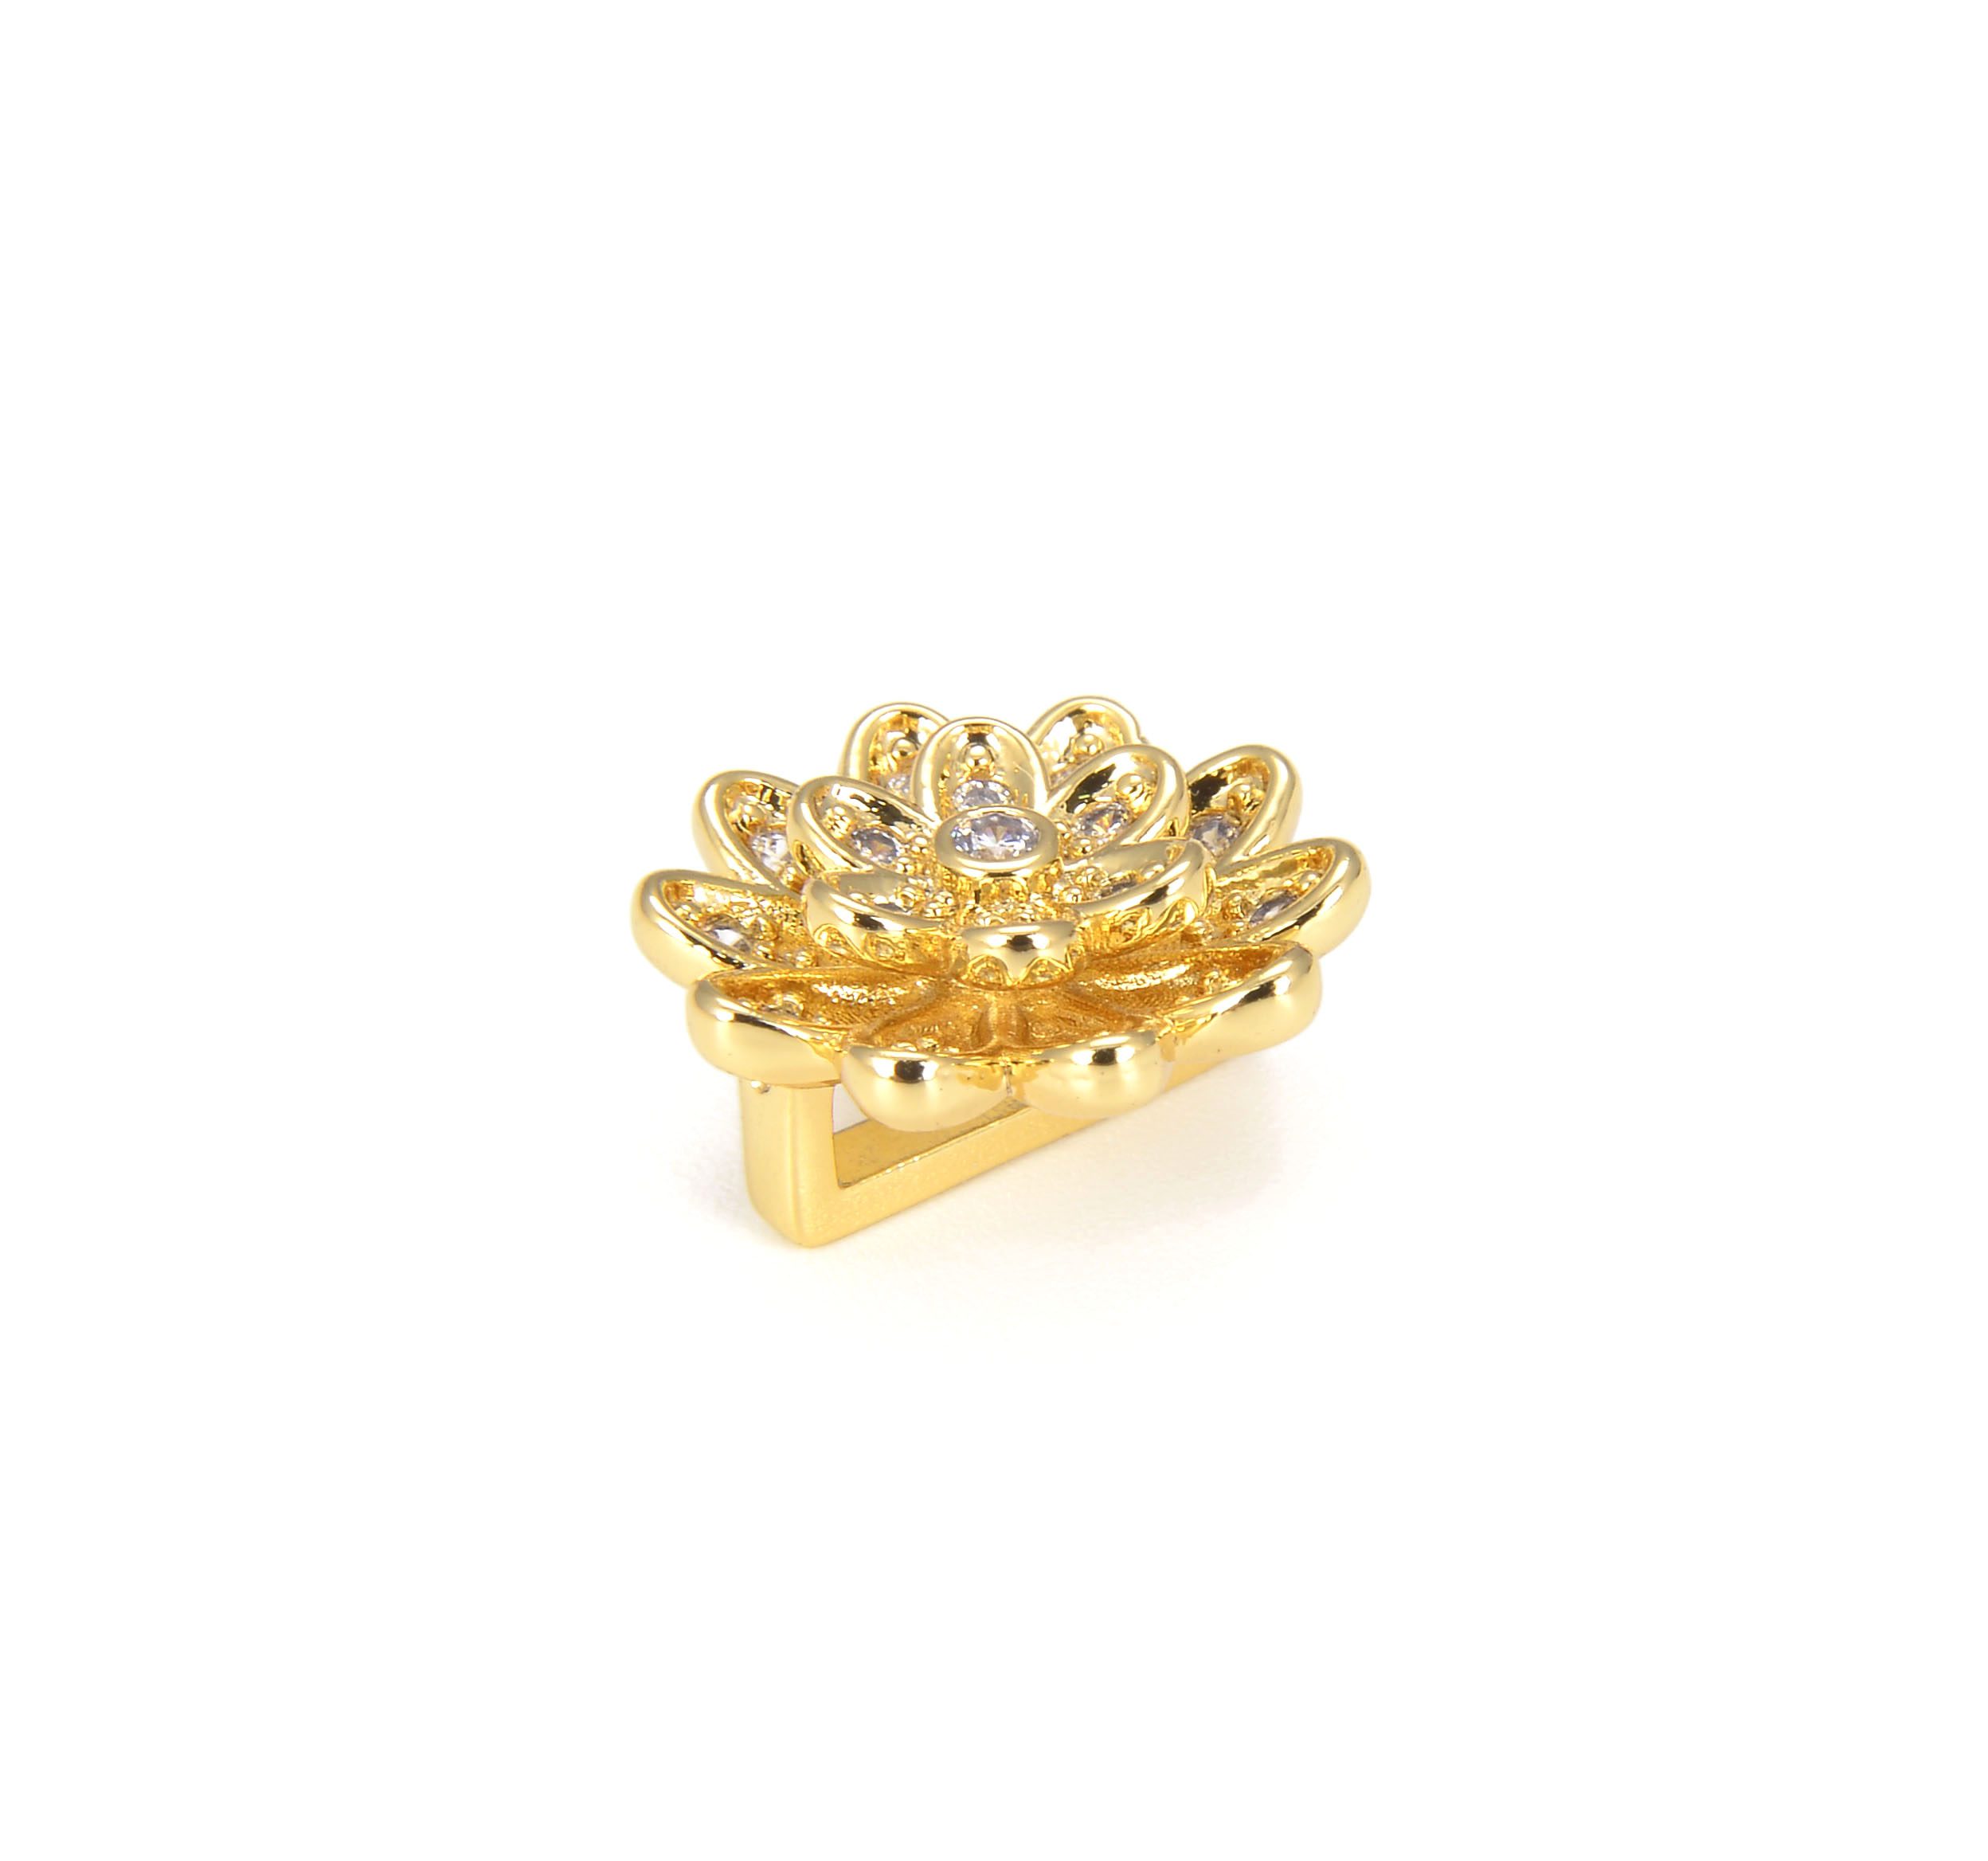 Micro Pave Lotus Charm for Bracelet Necklace Earring Making 18K Gold  Lotus Flower Slider Beads BD753 16mm